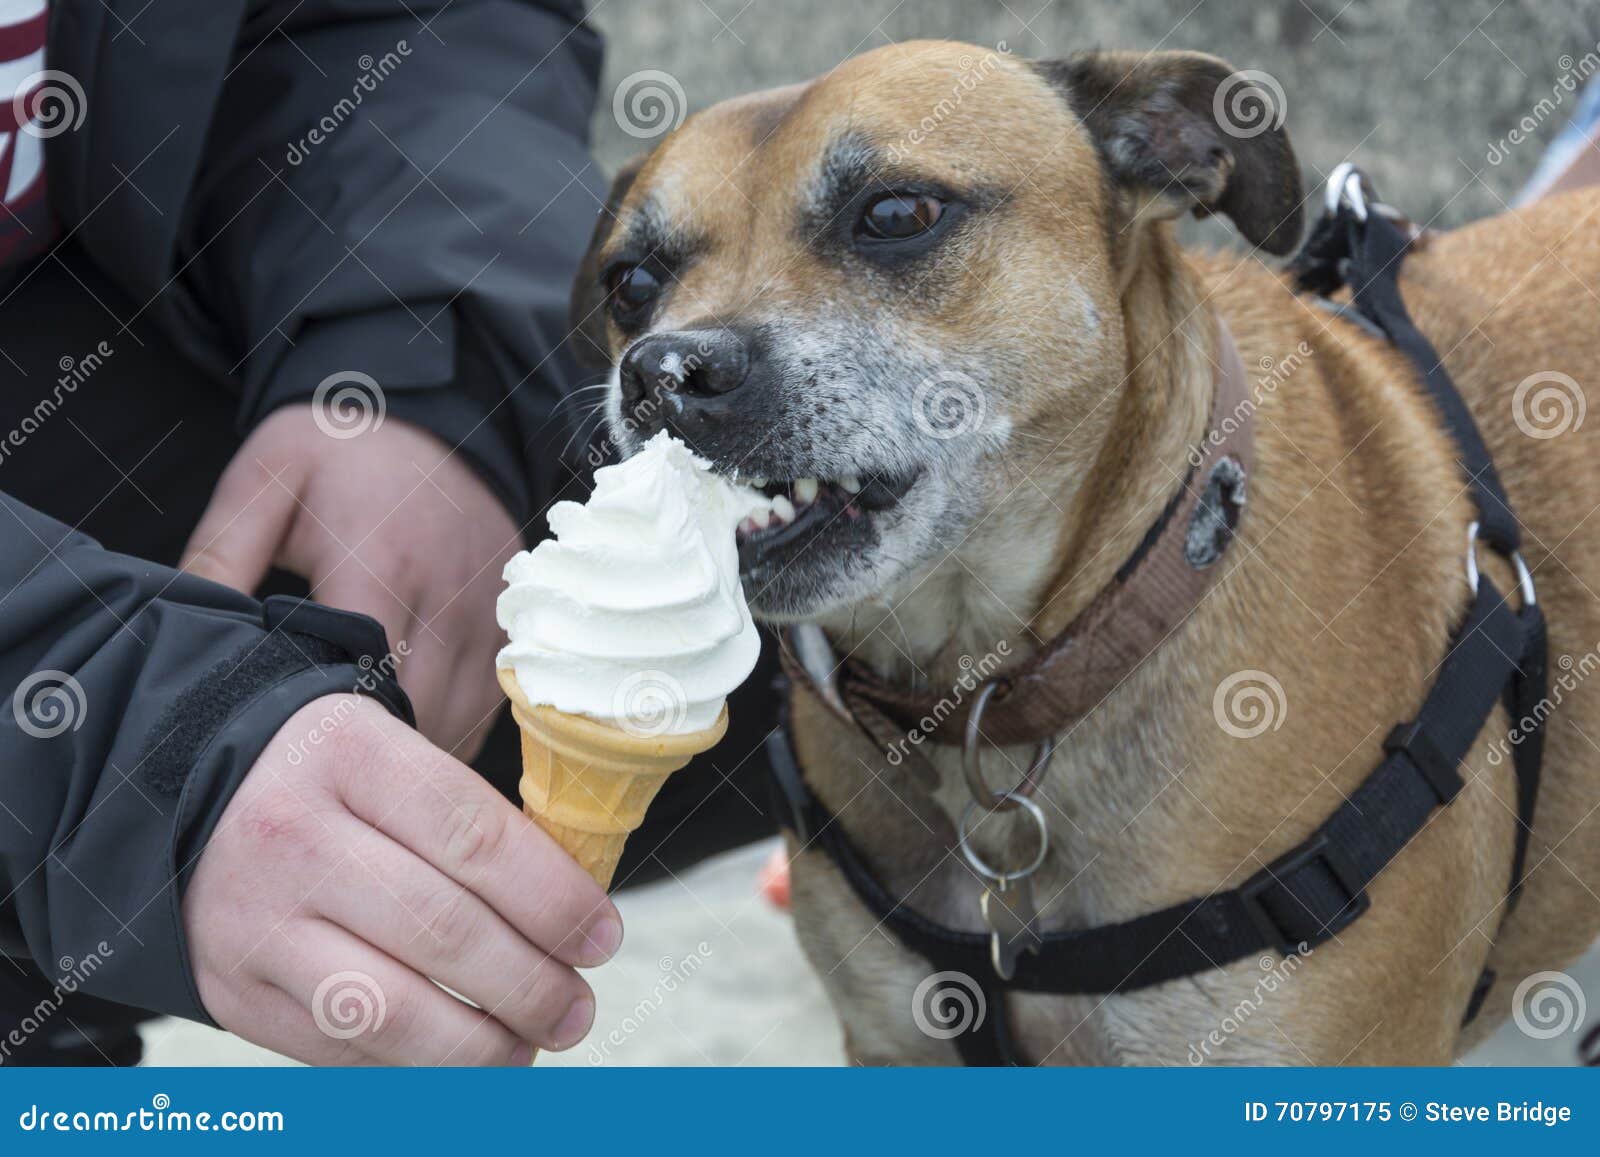 420 Dog Icecream Stock Photos pic picture